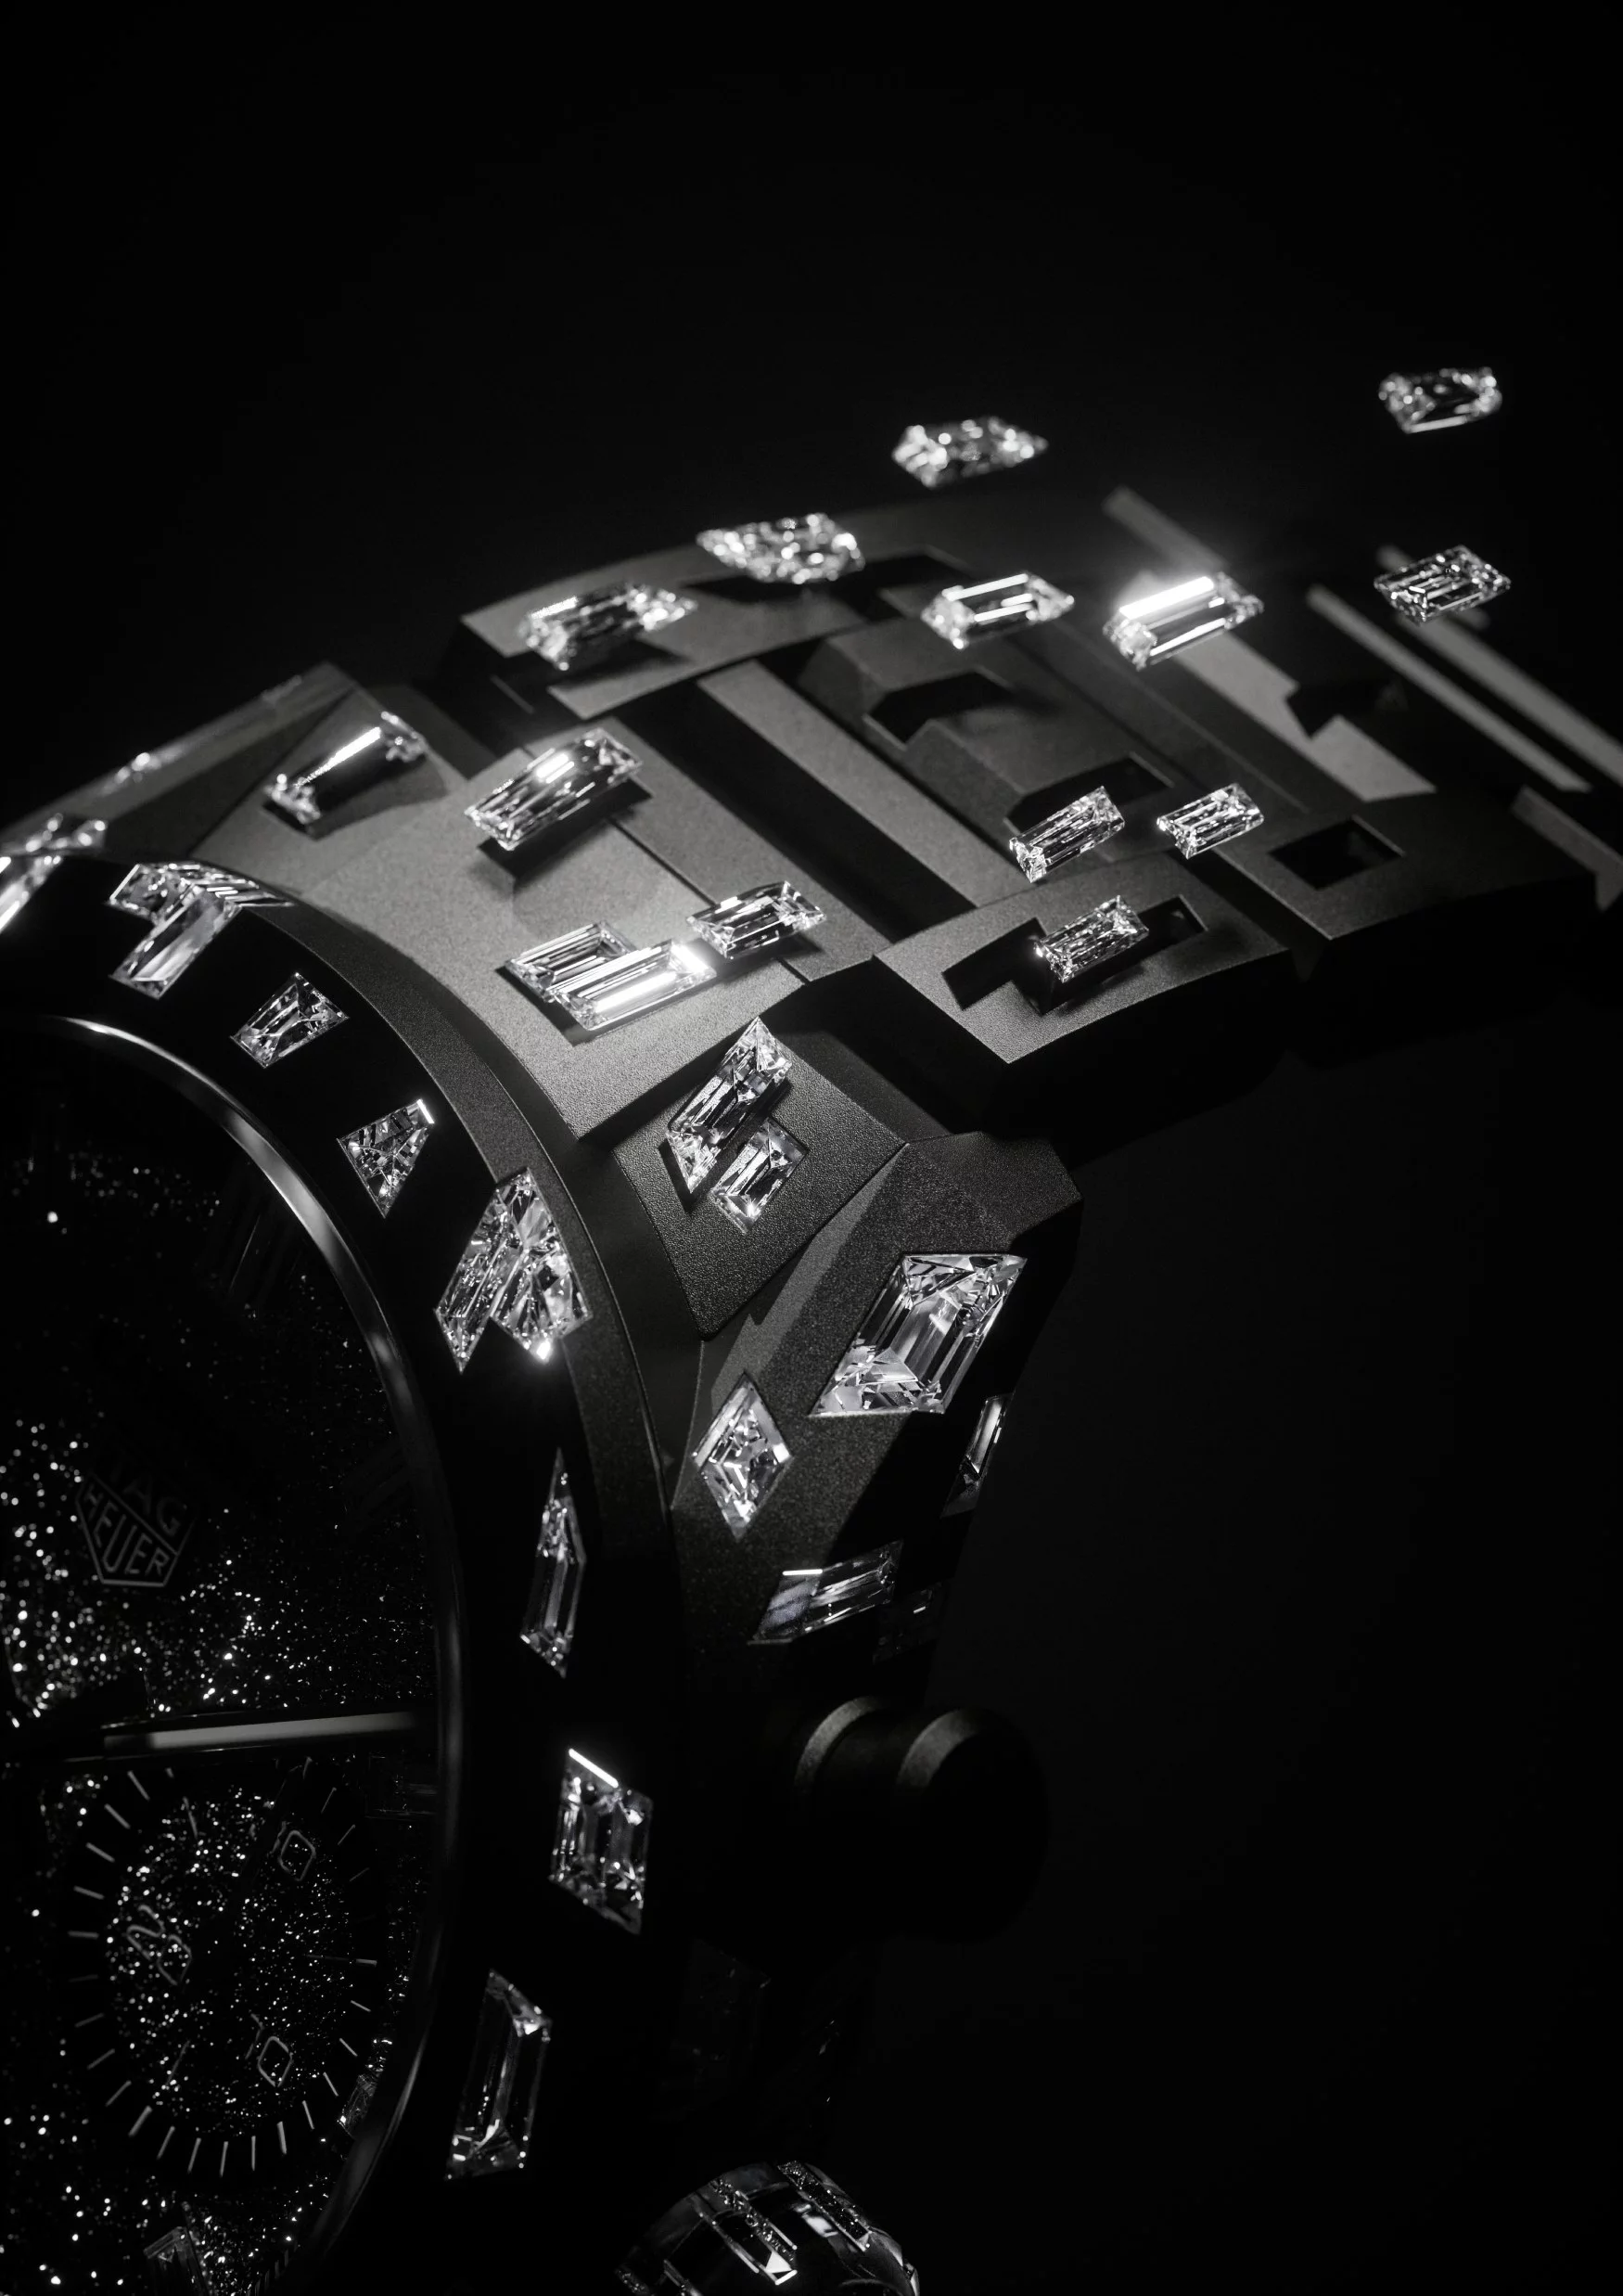 TAG Heuer Carrera Plasma Diamant d'Avant-Garde Chronograph Tourbillon adds  more diamonds - Time and Tide Watches